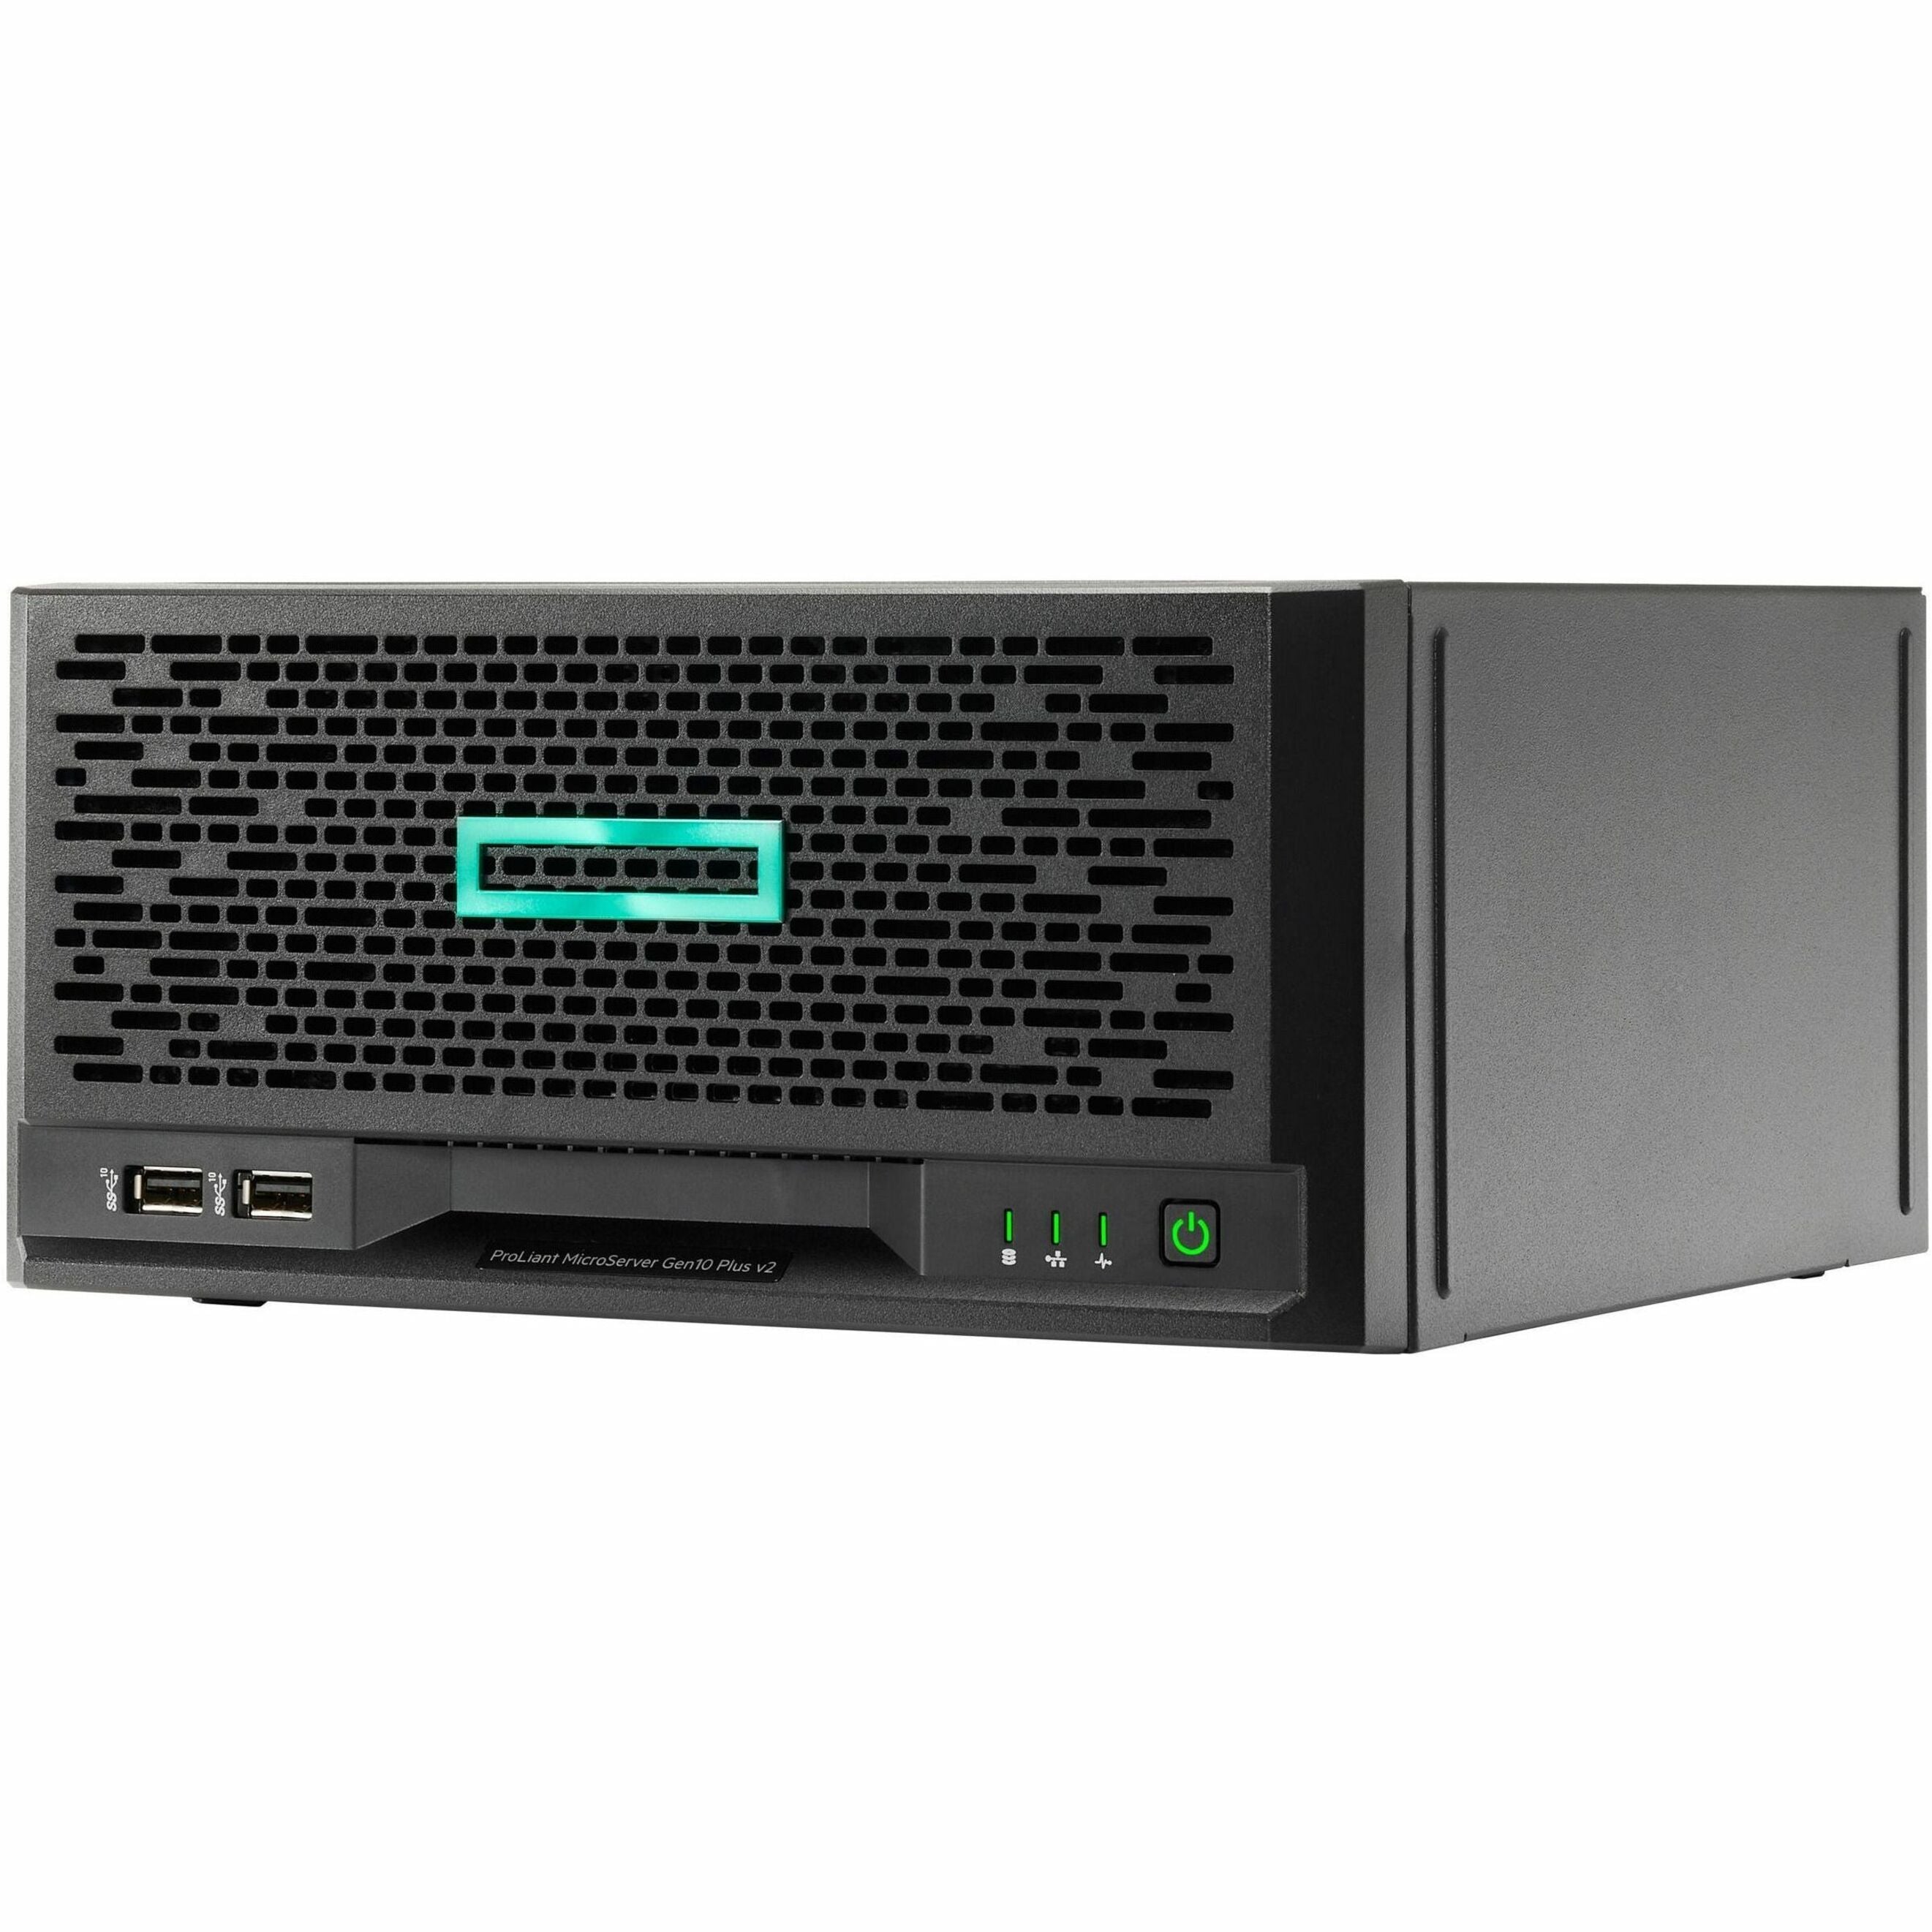 HPE P69102-005 ProLiant MicroServer Gen10 Plus V2 Servidor Torre Ultra Micro Server. Marca: HPE - Hewlett Packard Enterprise.